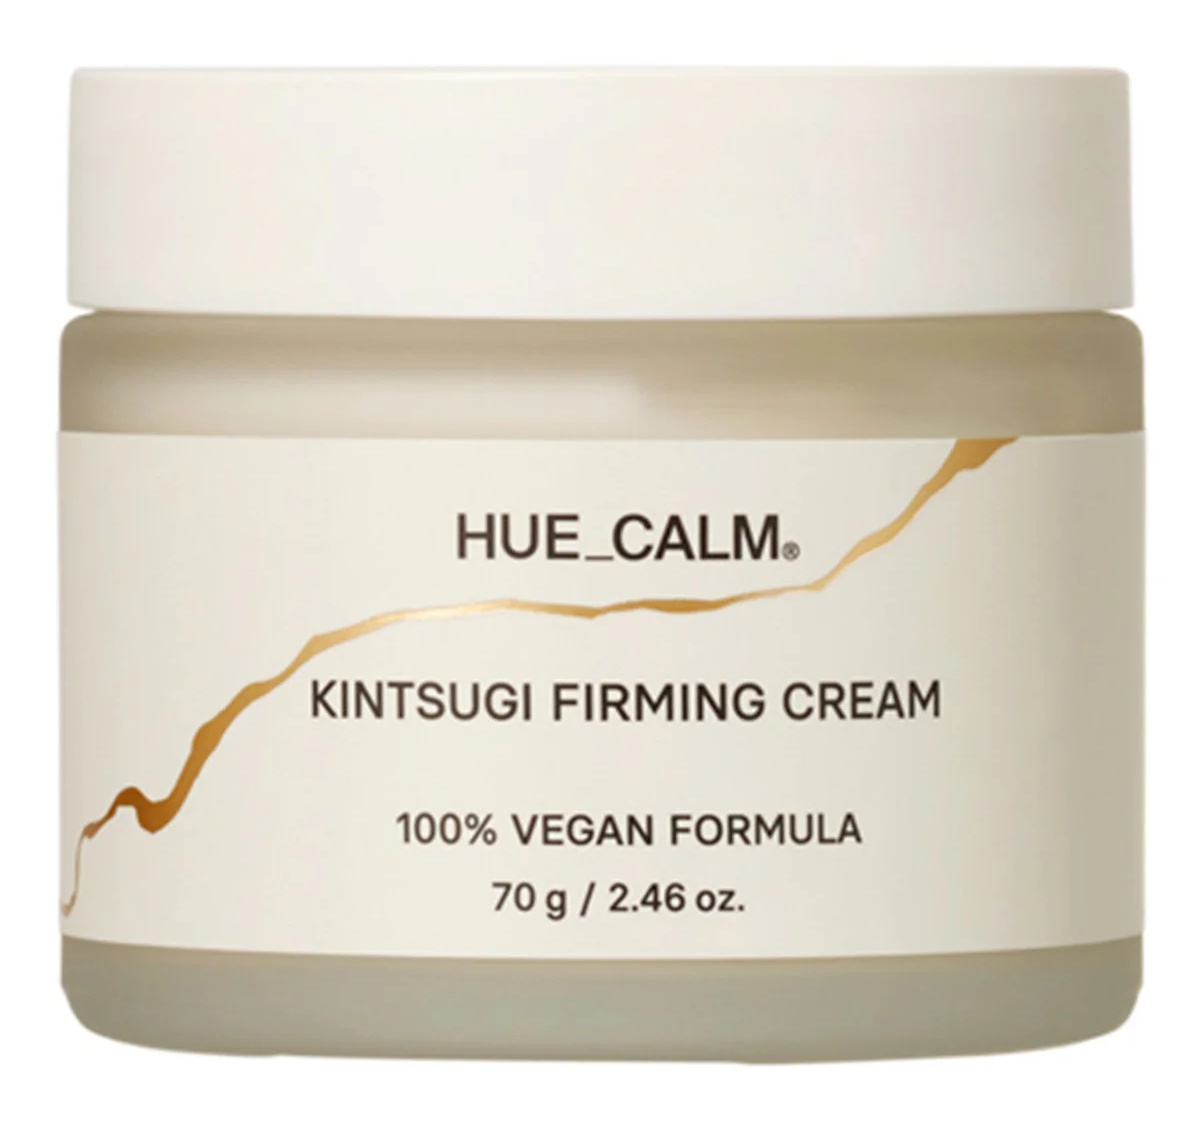 Hue Calm Kintsugi Firming Cream